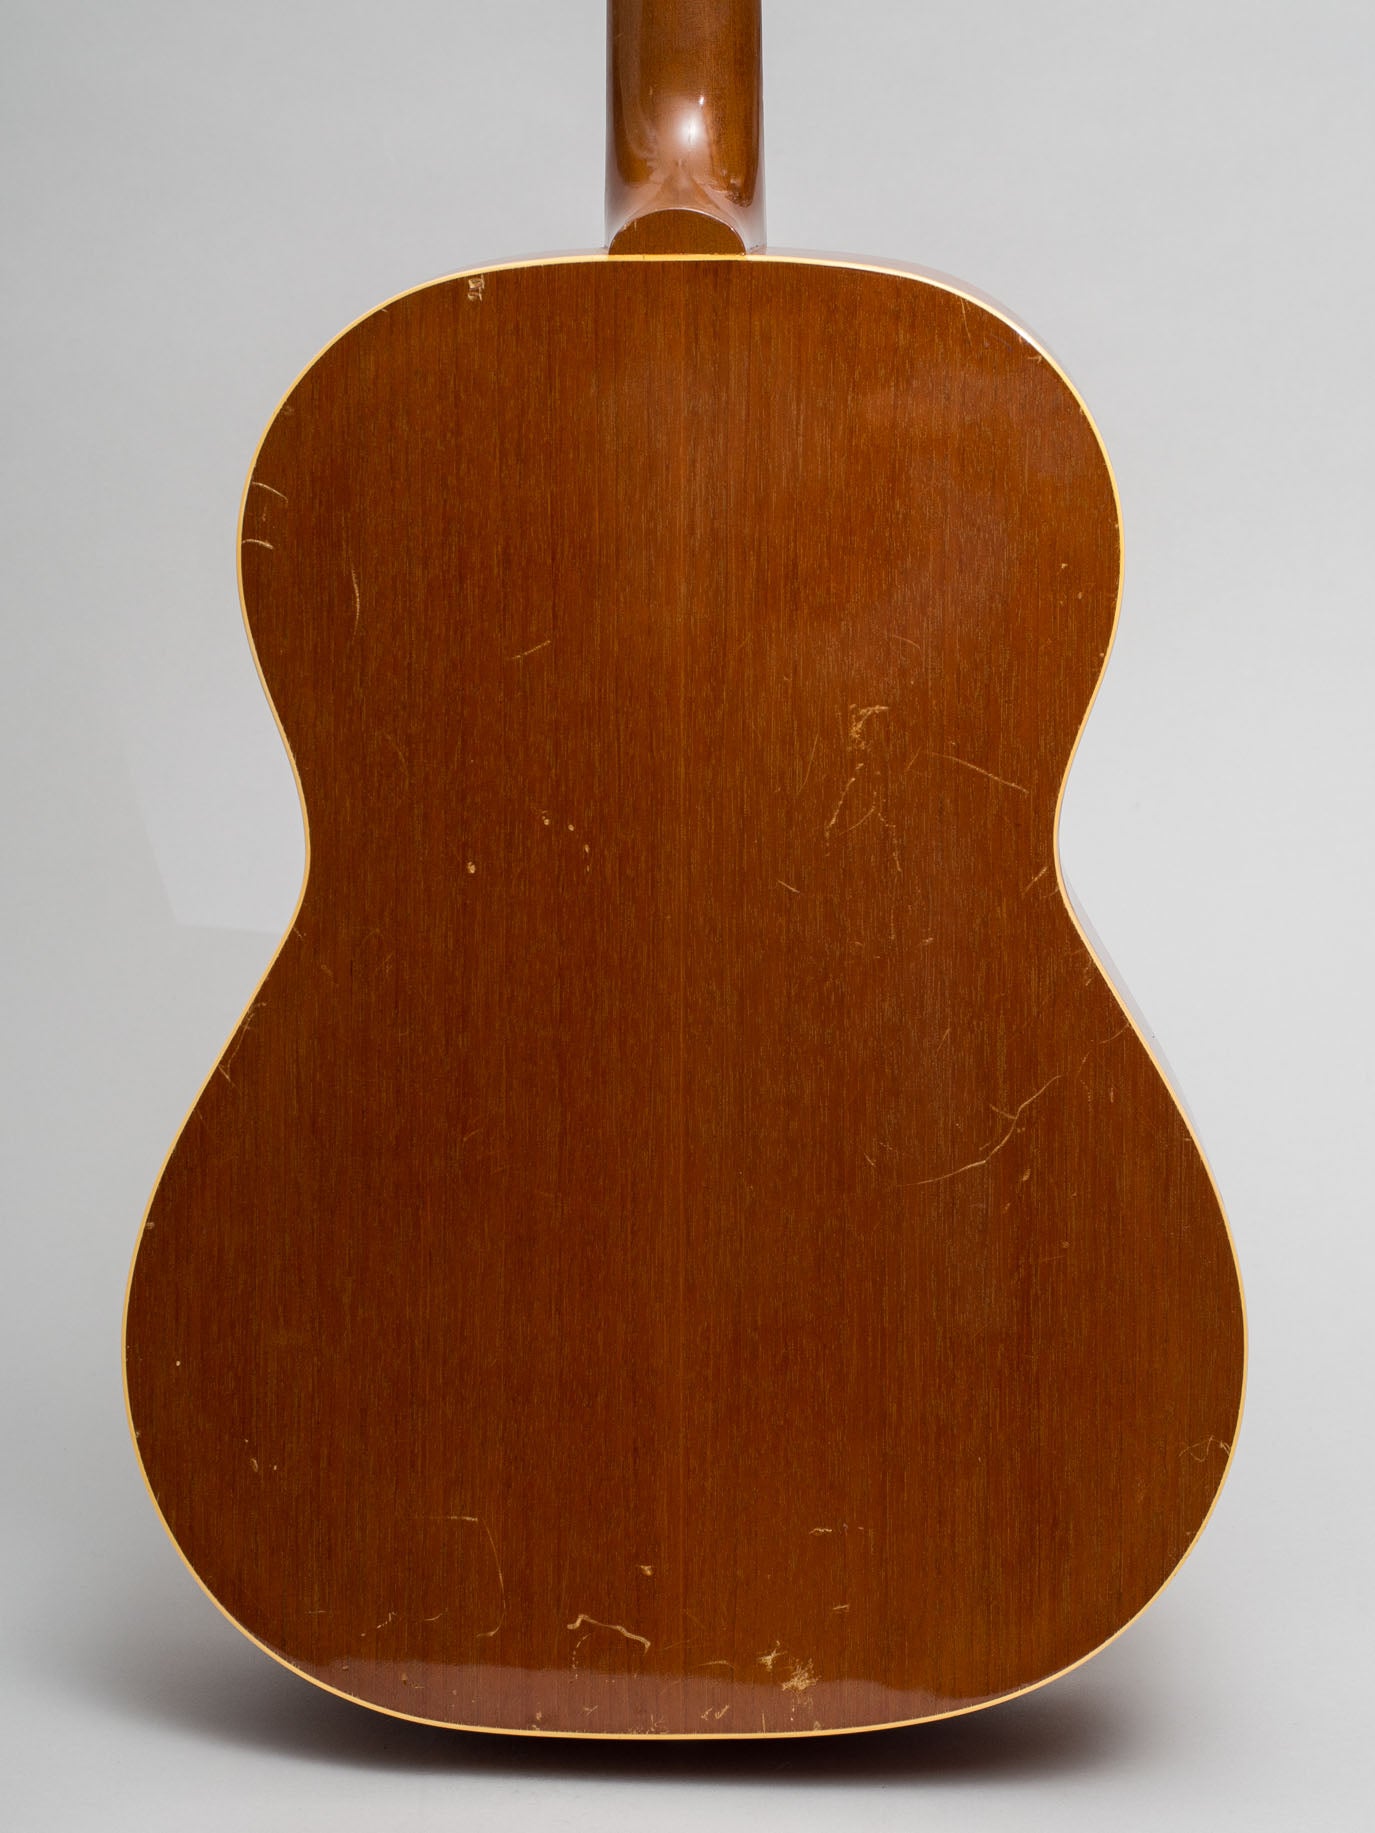 1958 Gibson LG-3